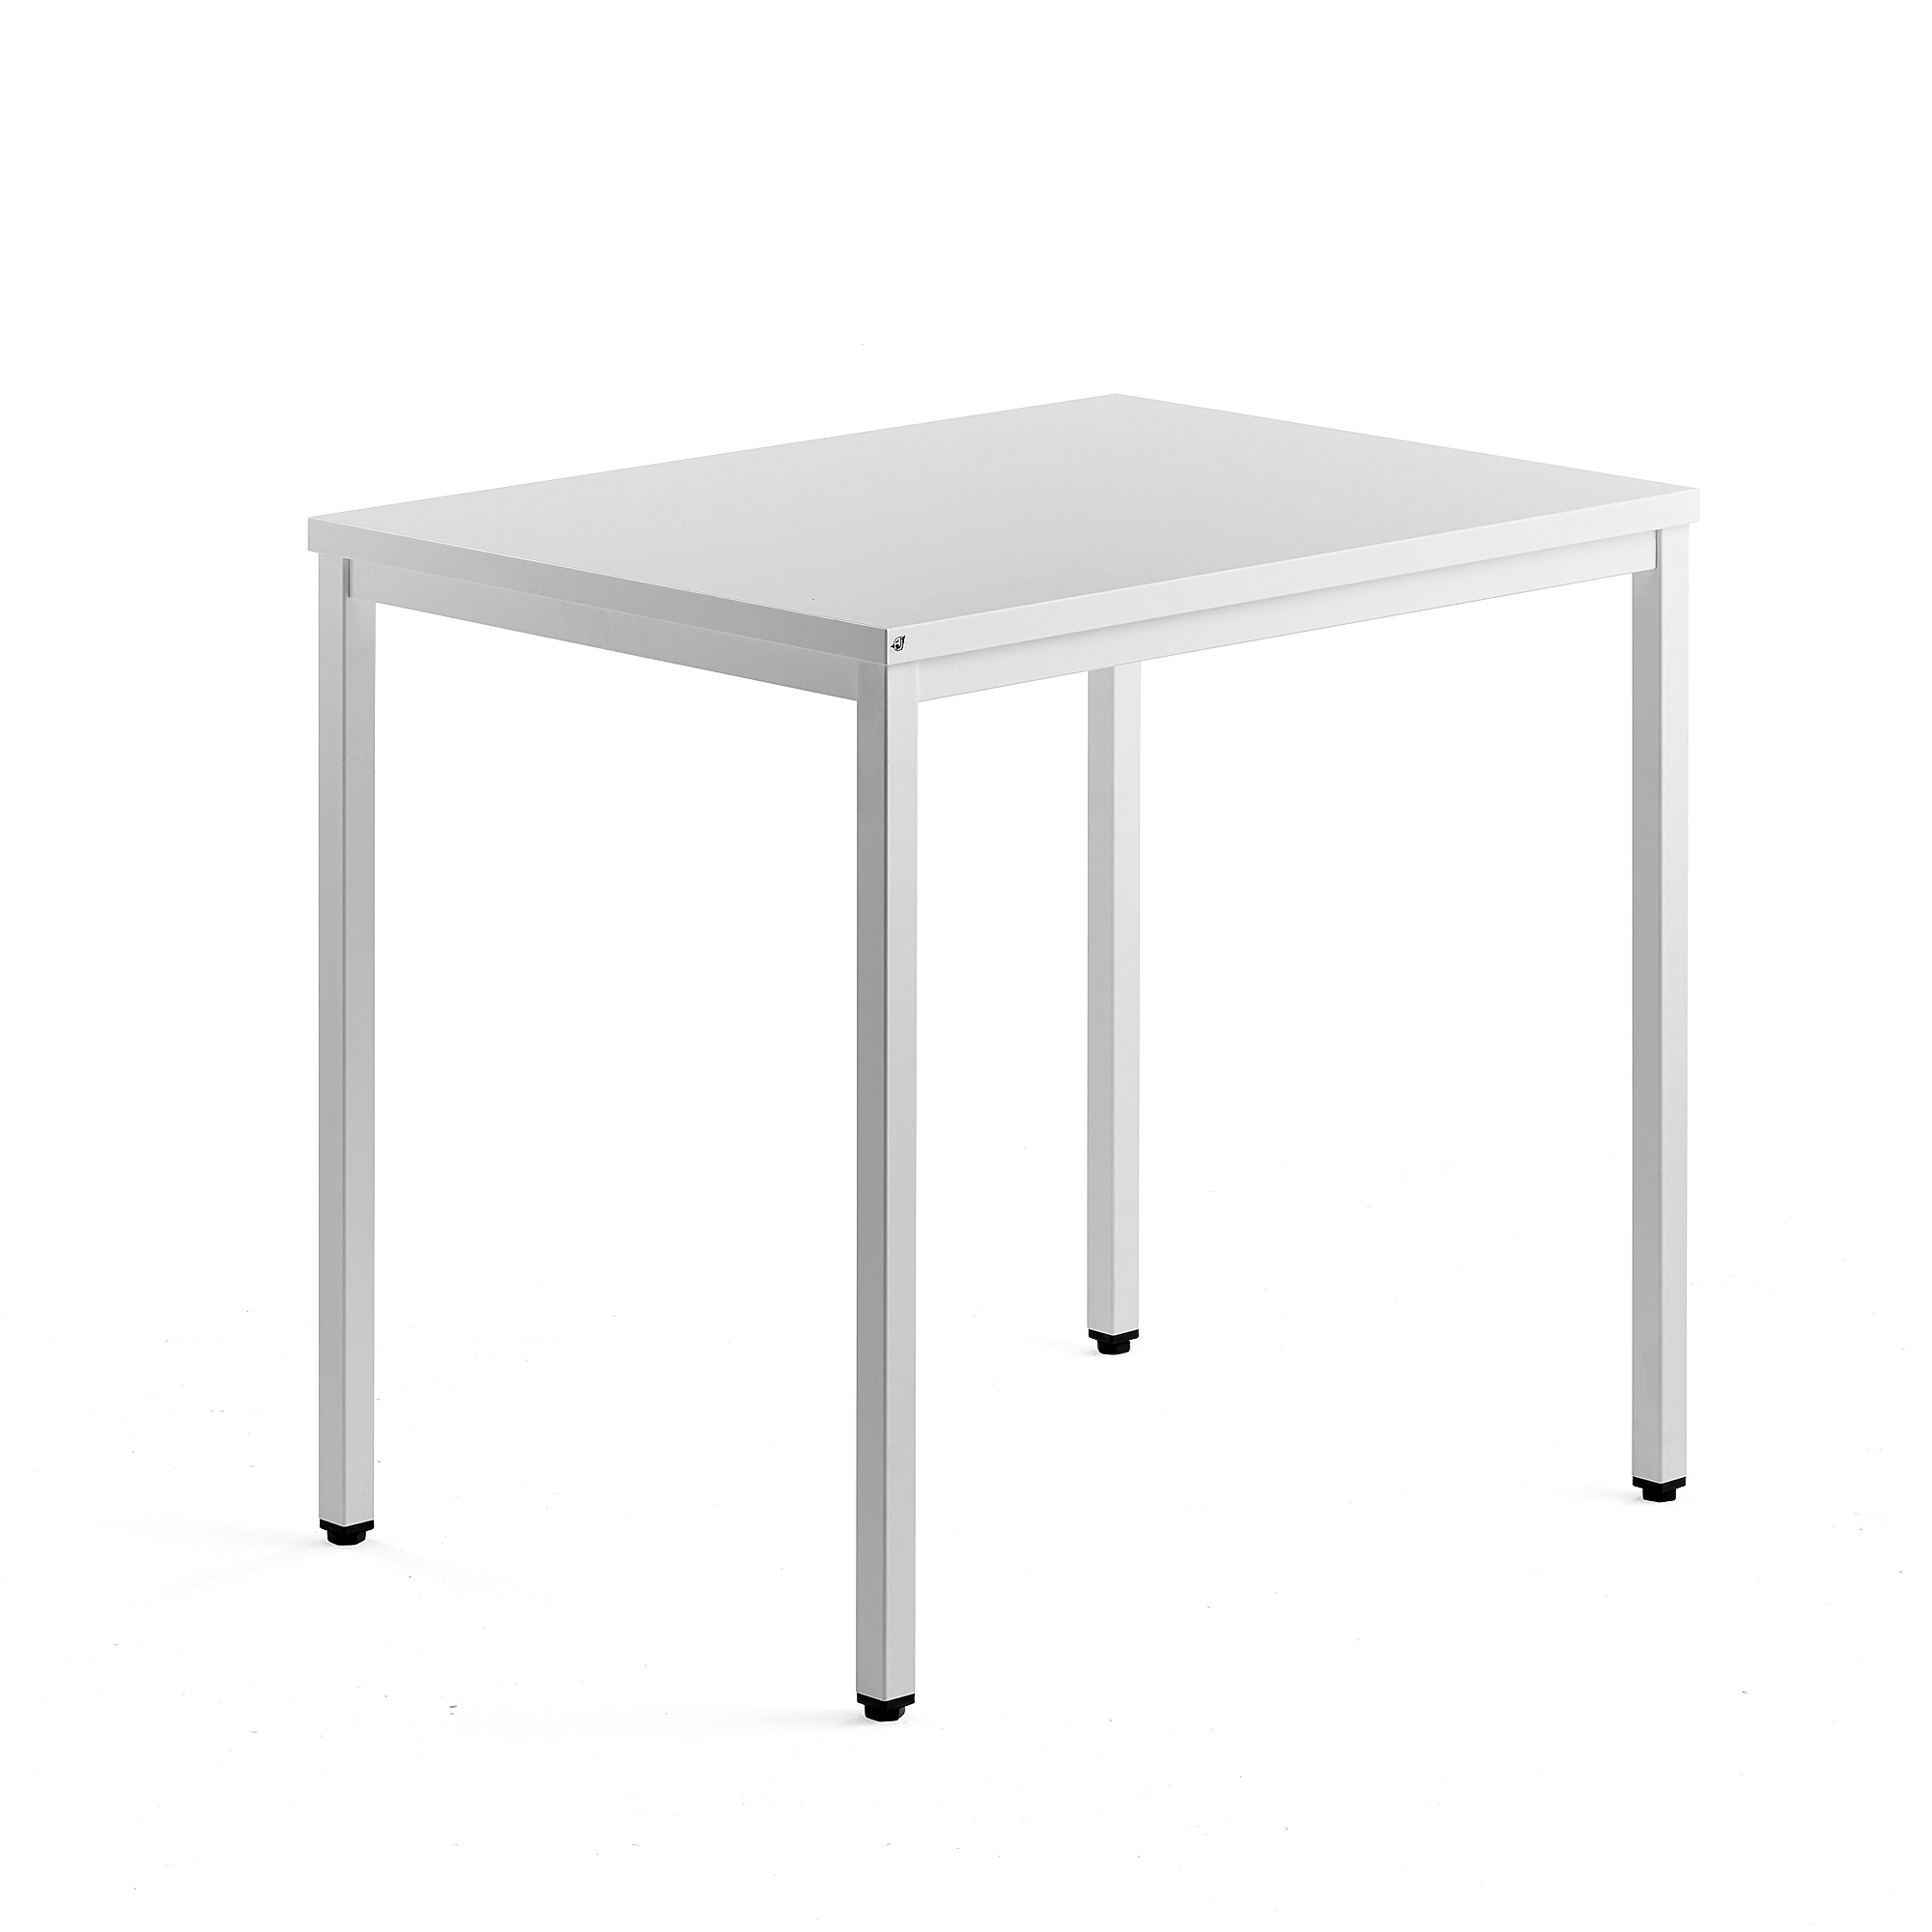 Přídavný stůl QBUS, 4 nohy, 800x600 mm, bílý rám, bílá